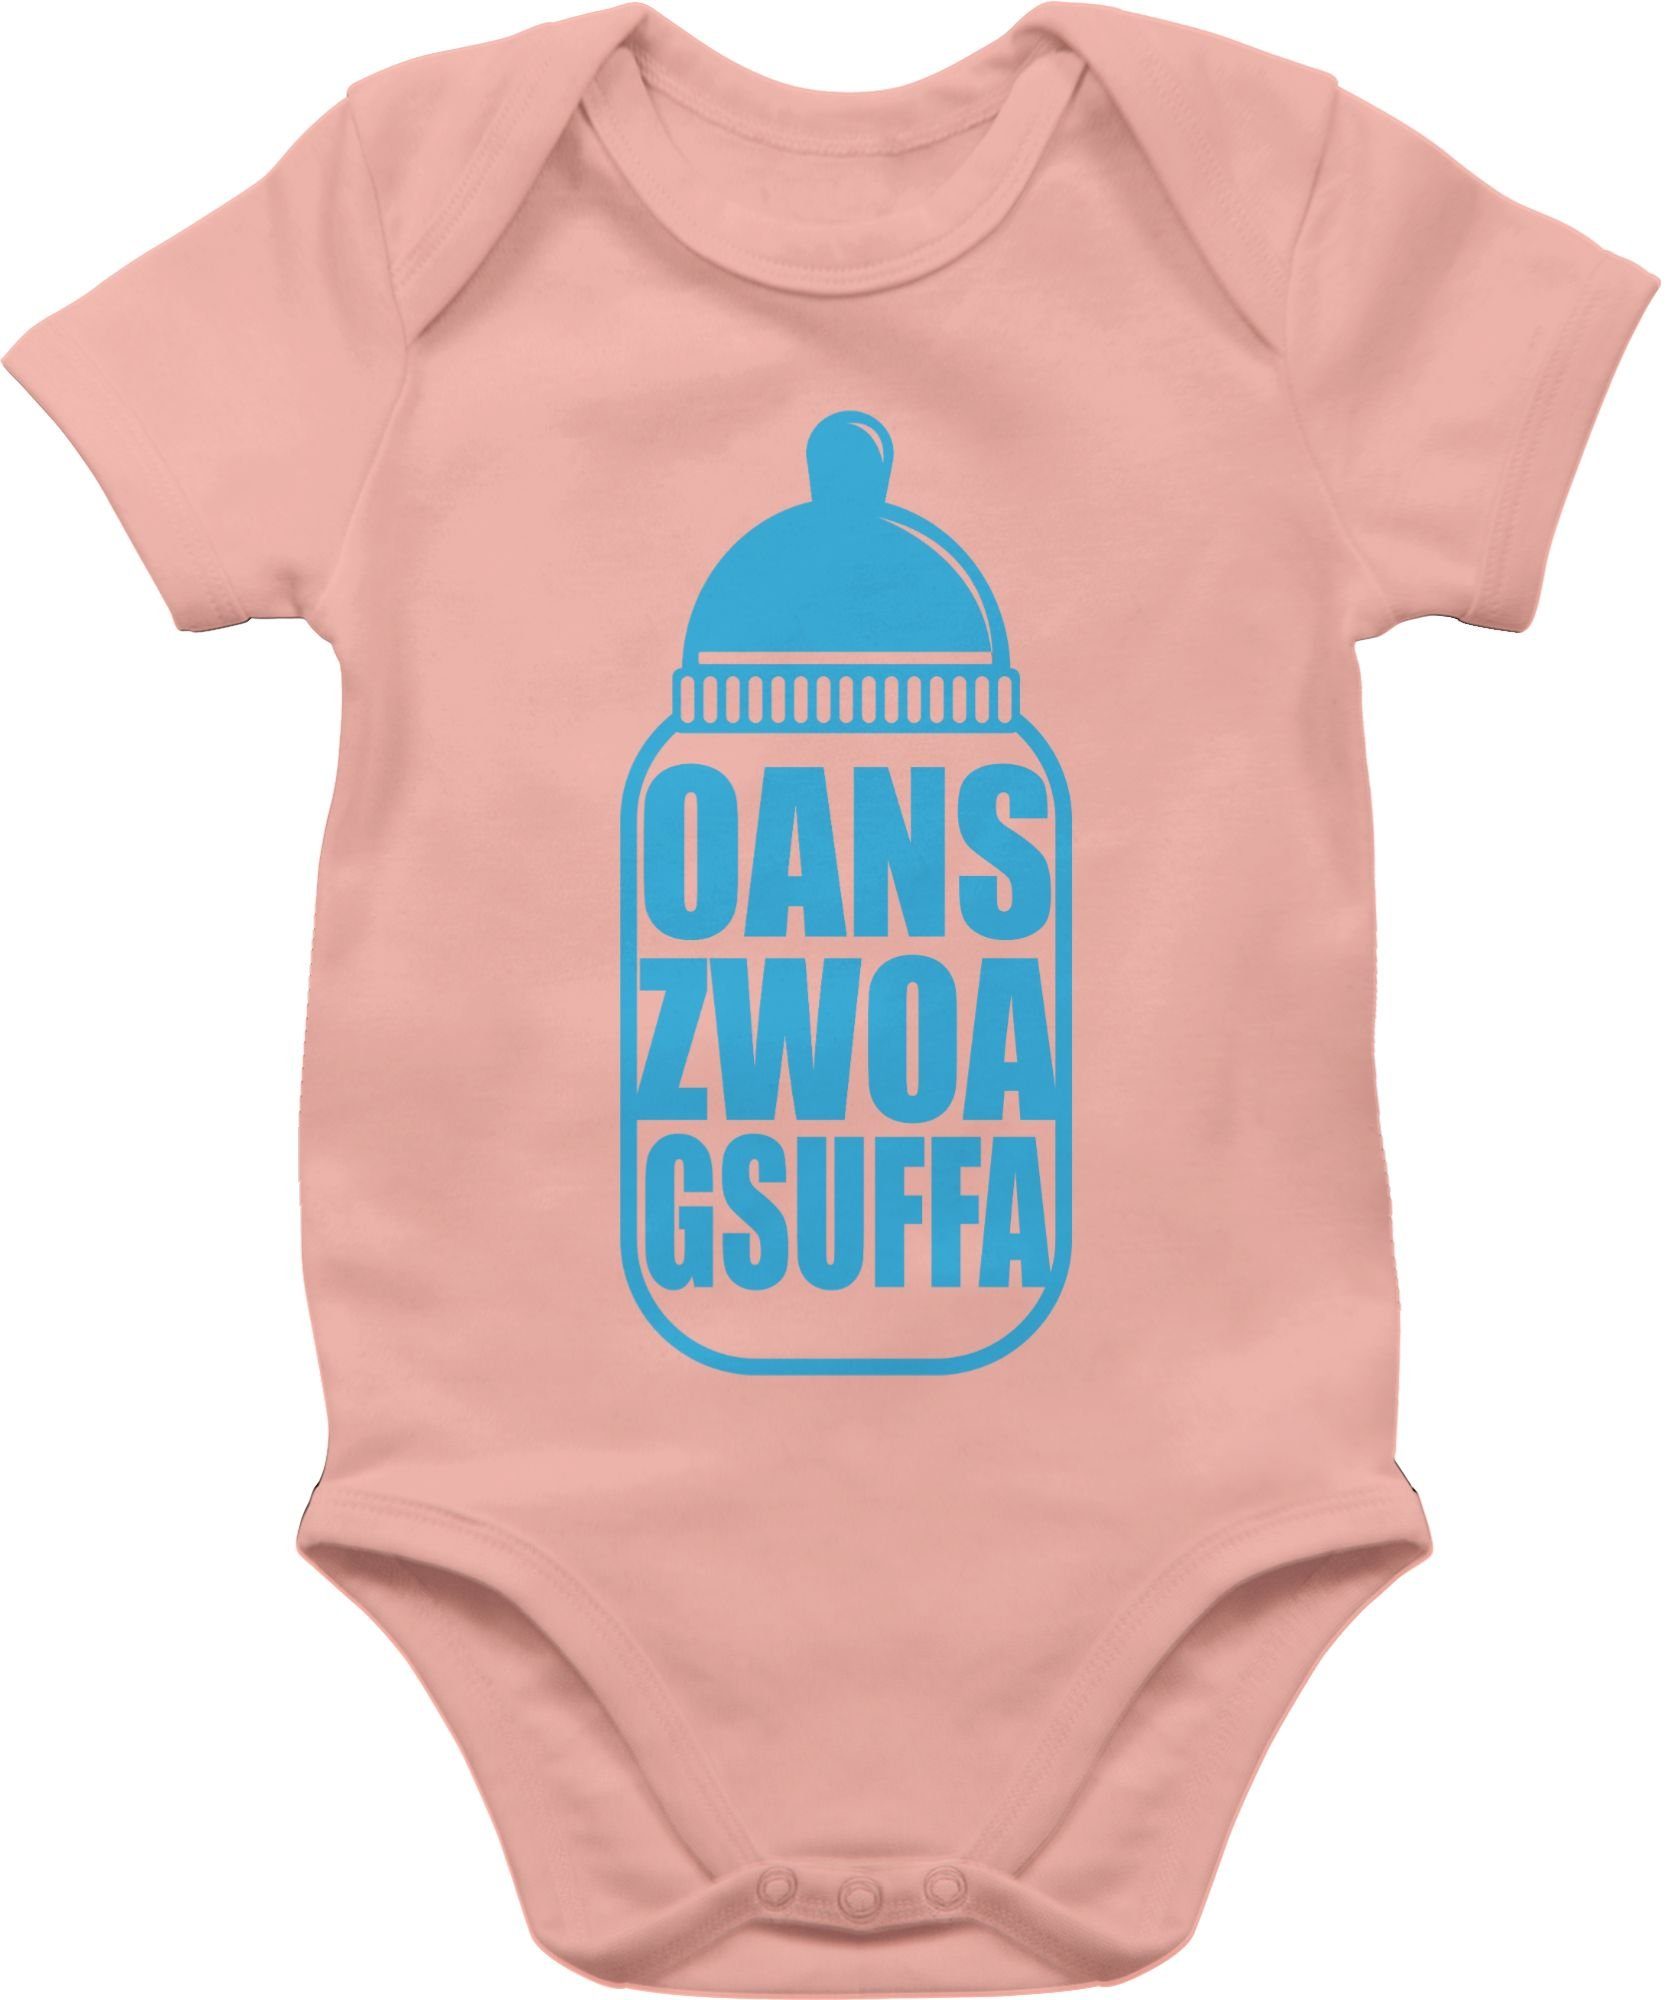 Mode Shirtbody Zwoa Gsuffa Oans Outfit für Oktoberfest Babyrosa Babyflasche Shirtracer blau Baby 3